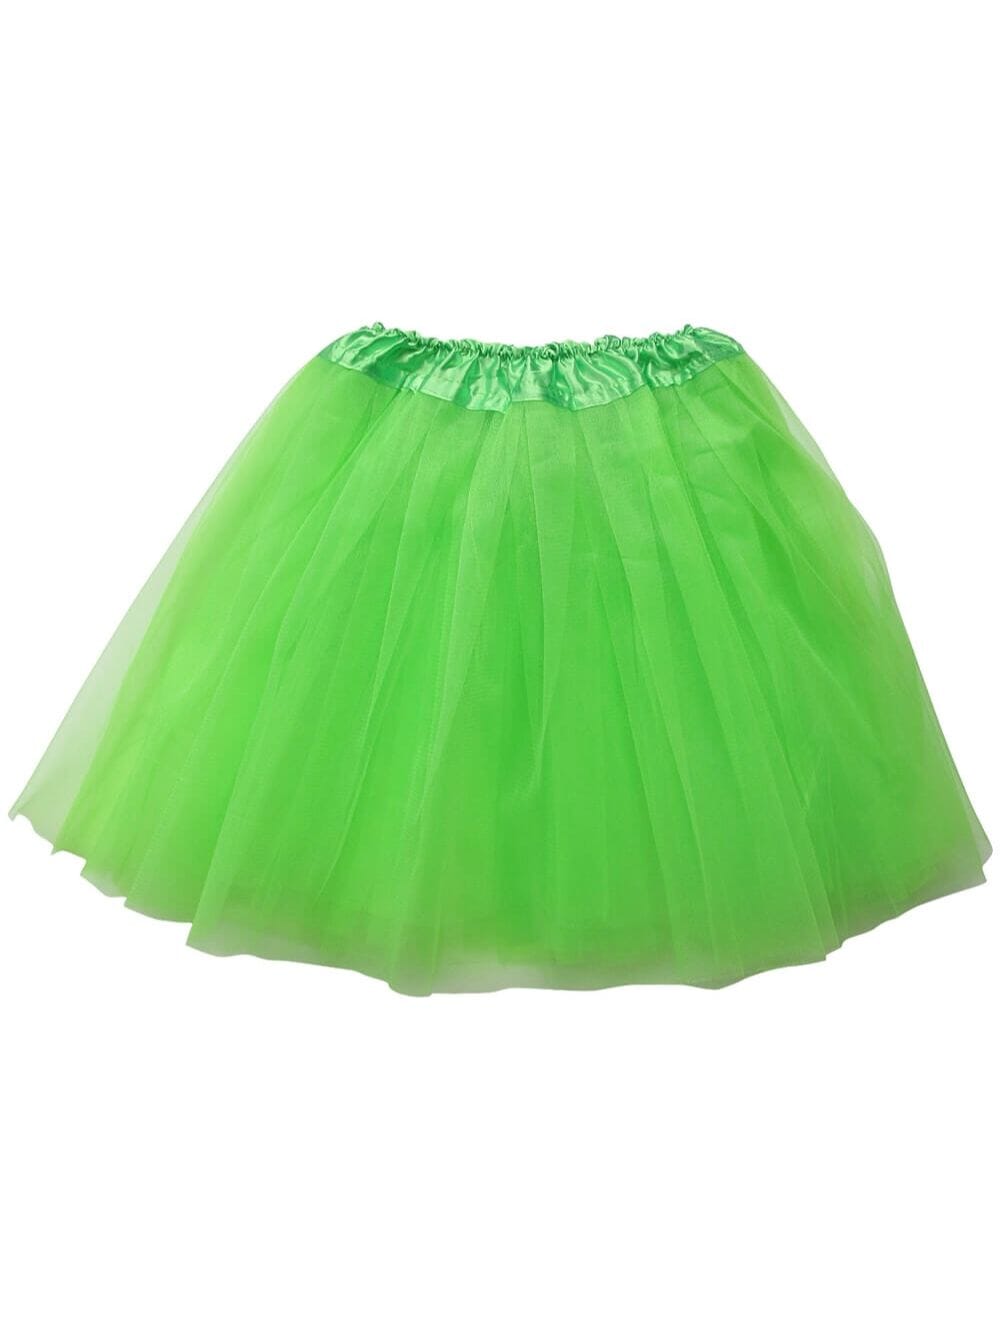 Turquoise Green Girl's Tutu, Adult Tutu, Women's, Plus or Extra Plus Size  Tulle Skirt 3 Layer Ballet 3 Layers, Elastic Waist Costume Dress -   Denmark